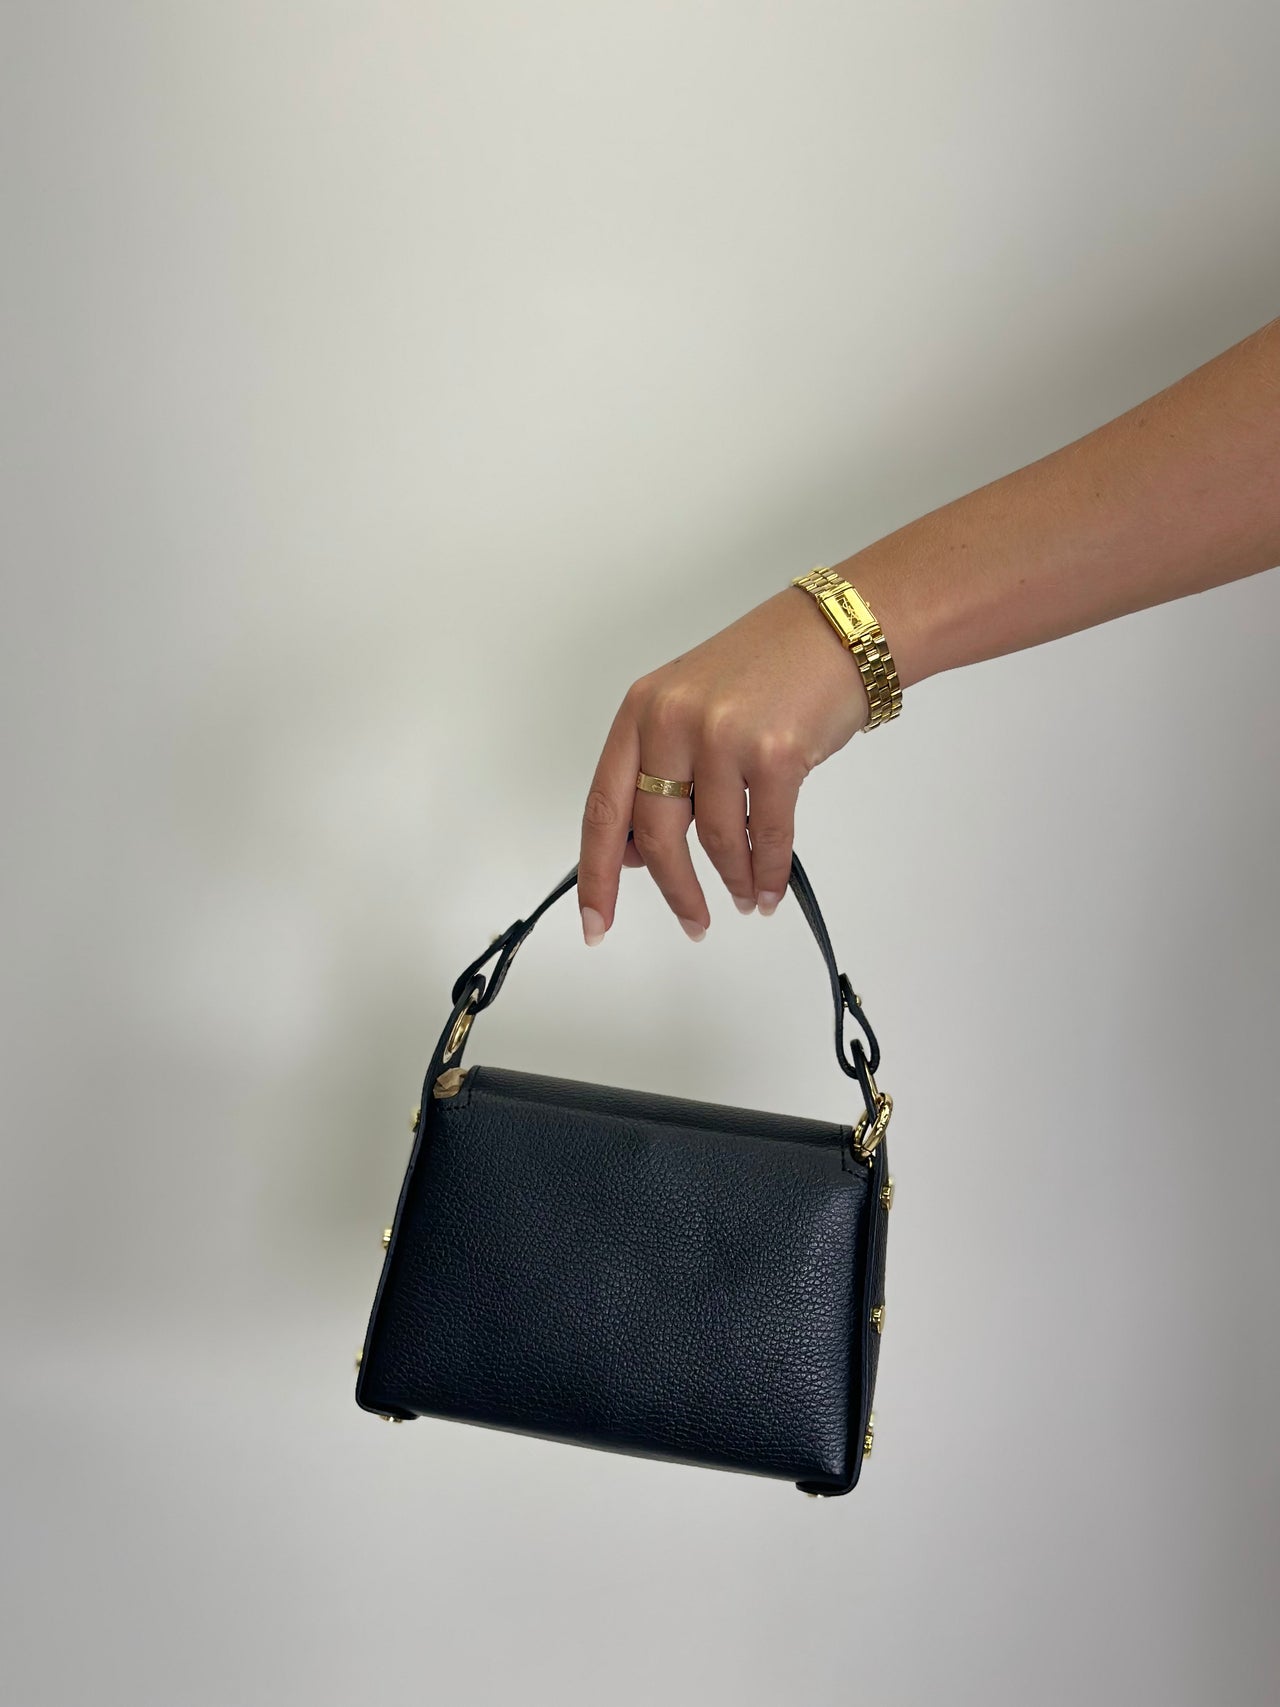 Far From Average Handbag Black, Evening Bag by German Fuentes | LIT Boutique